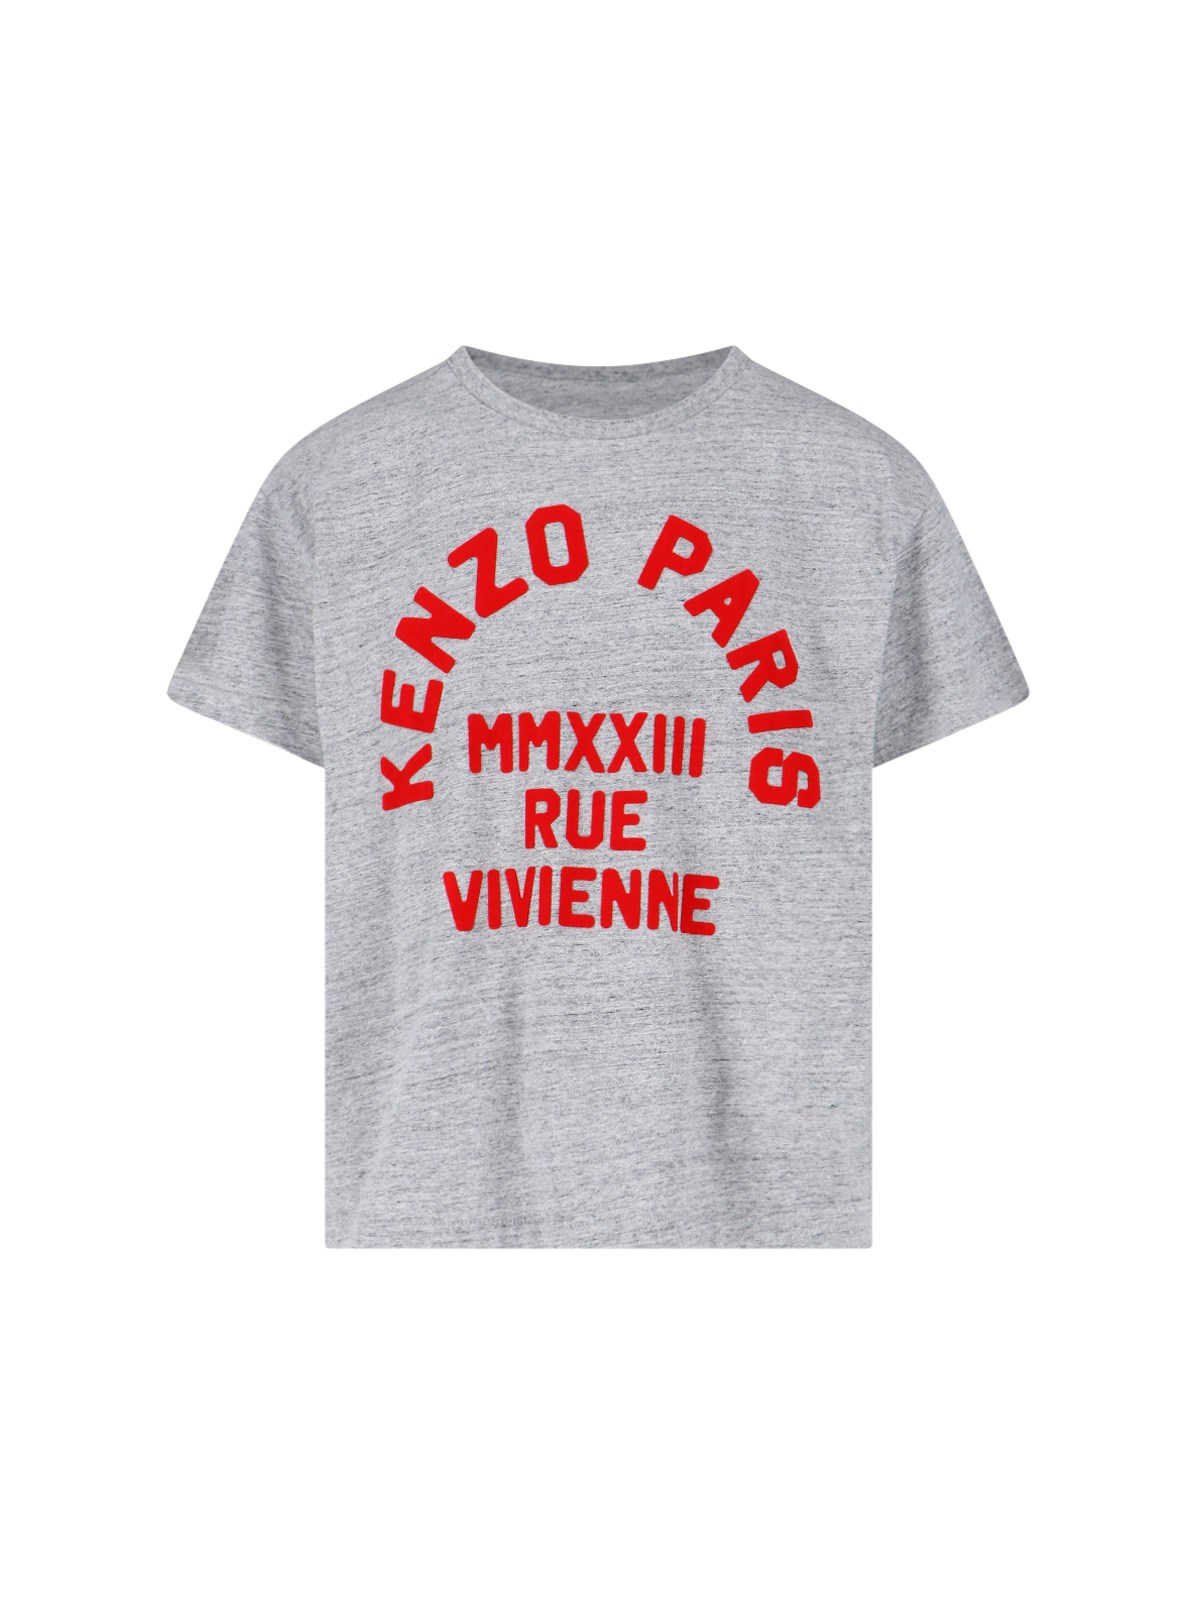 Kenzo 'rue vivienne' t-shirt available on SUGAR - 117676